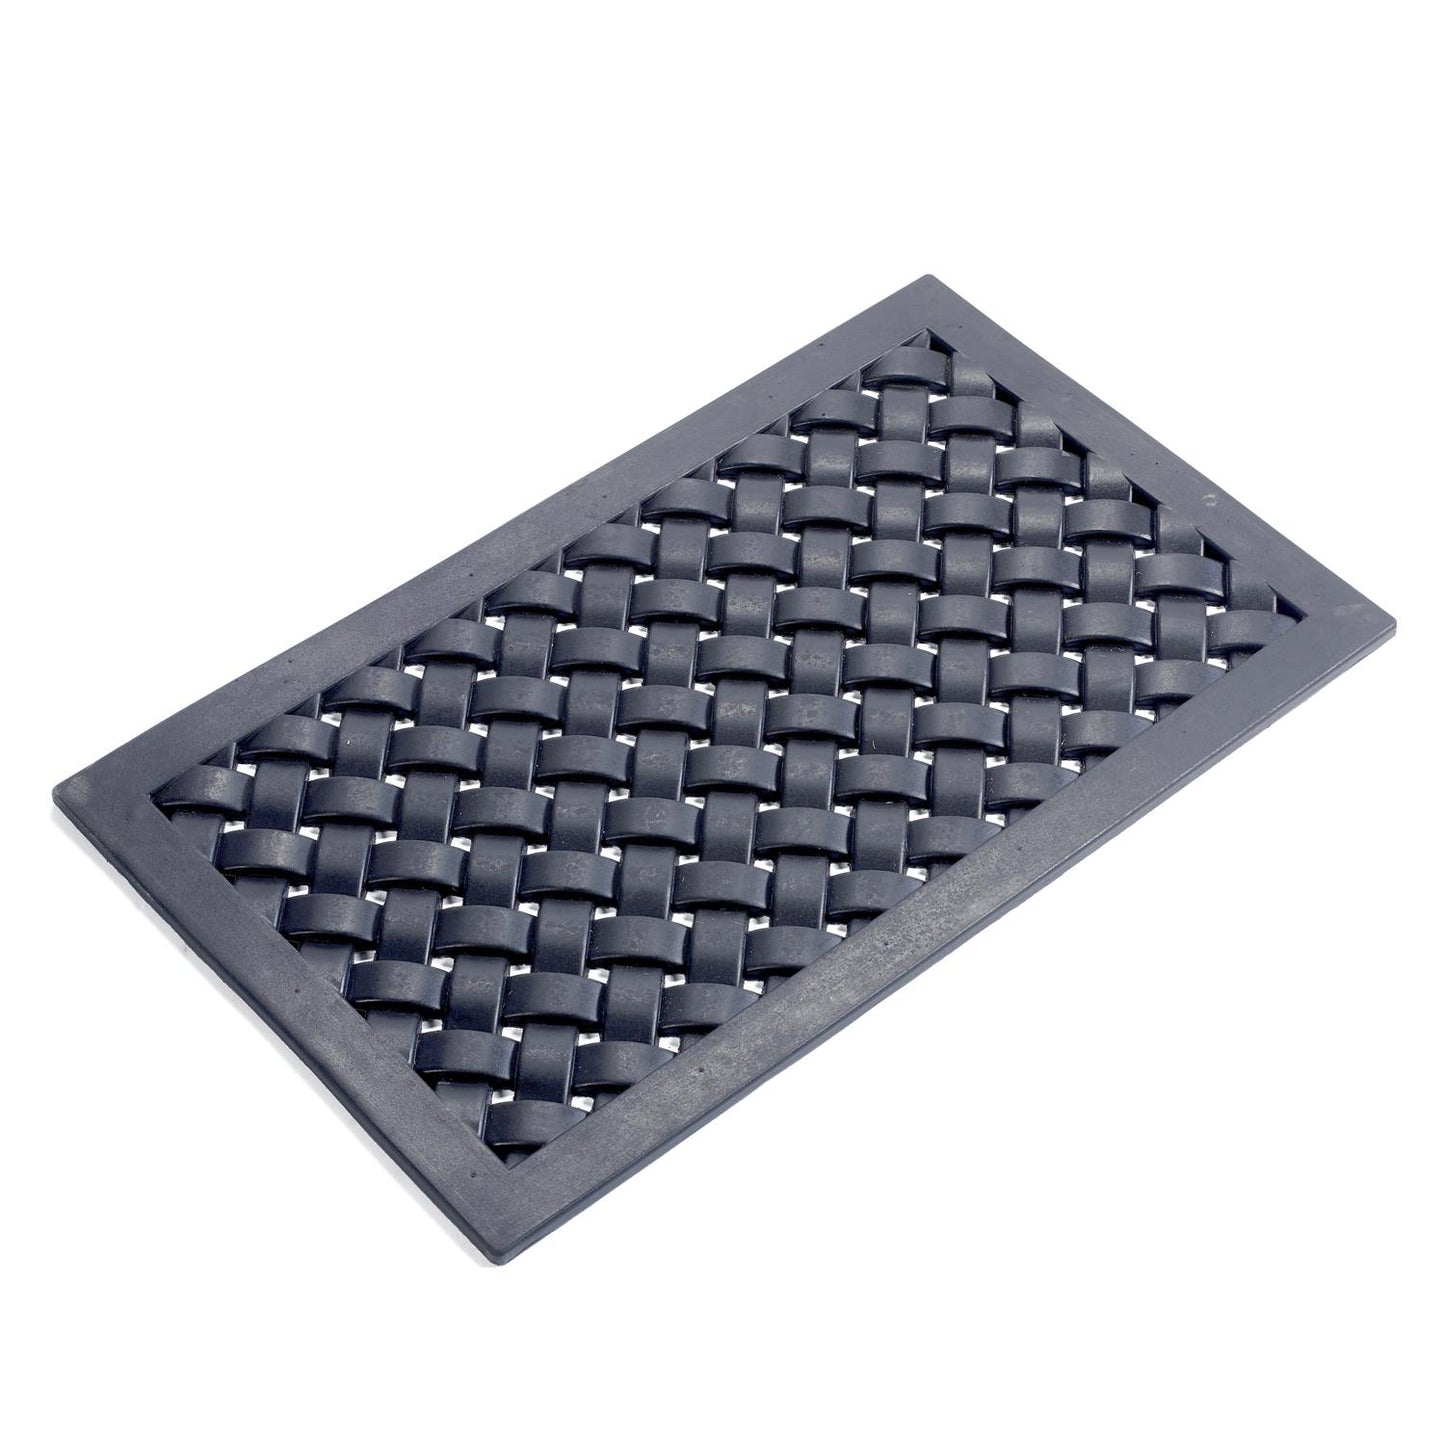 Doormat, weaving, square, black rubber